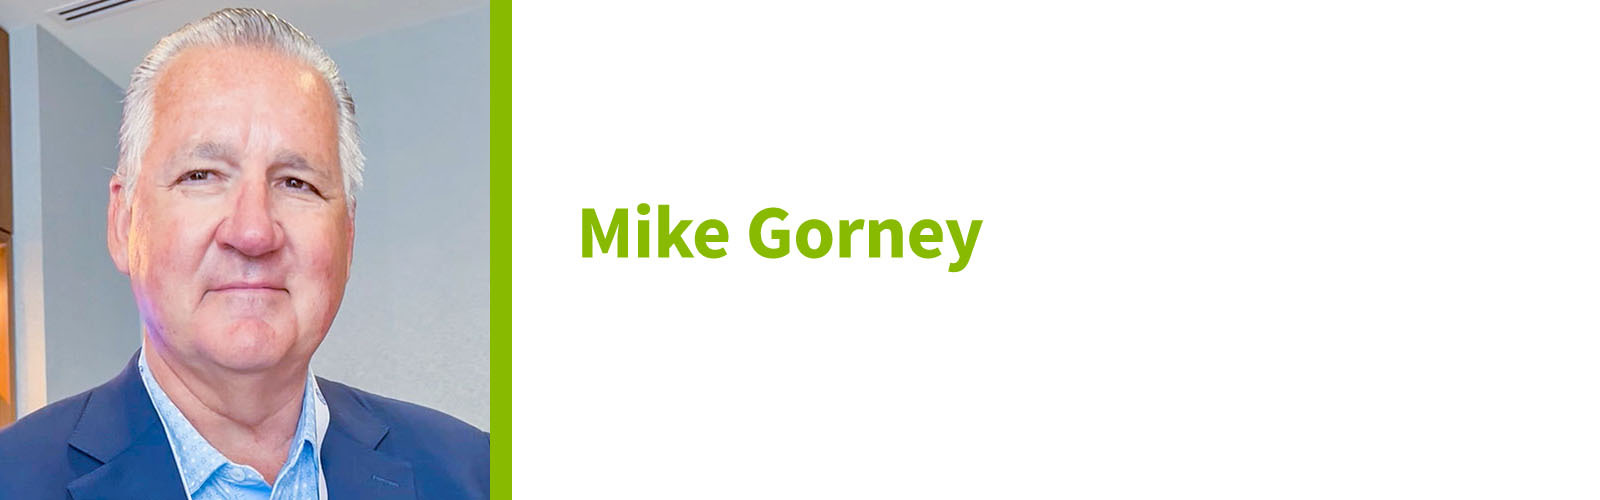 Mike Gorney